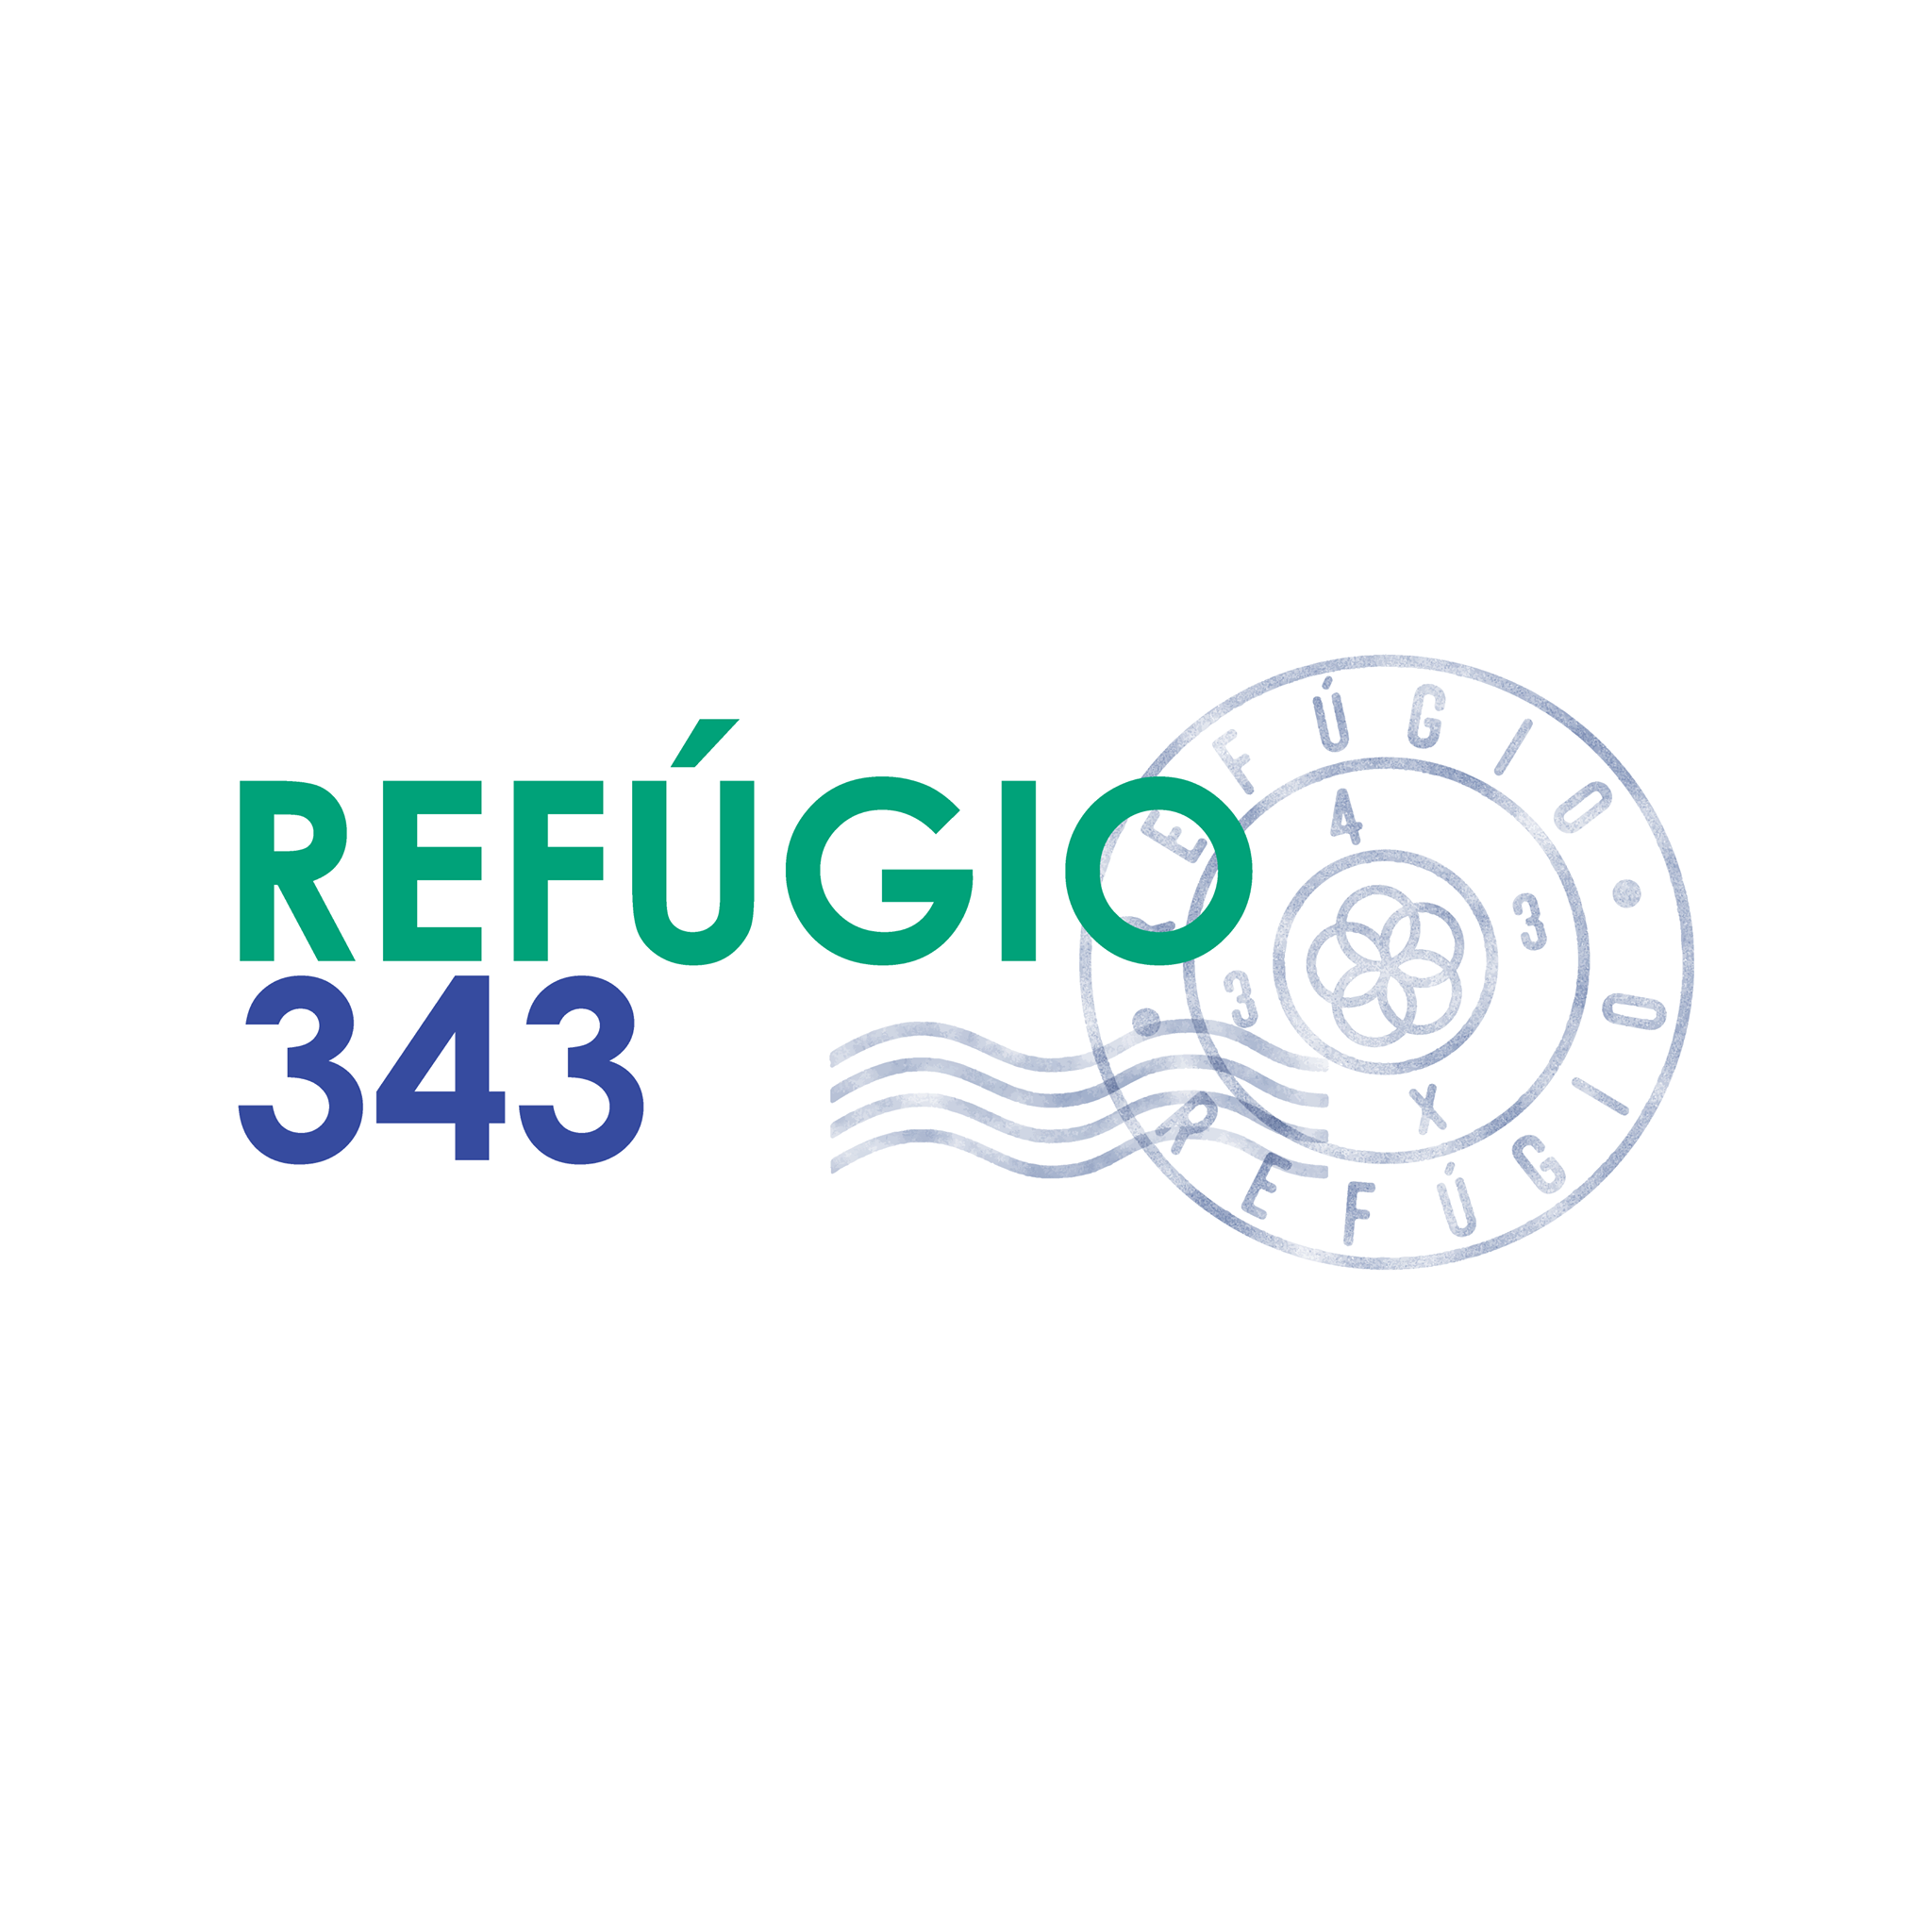 Refugio 343